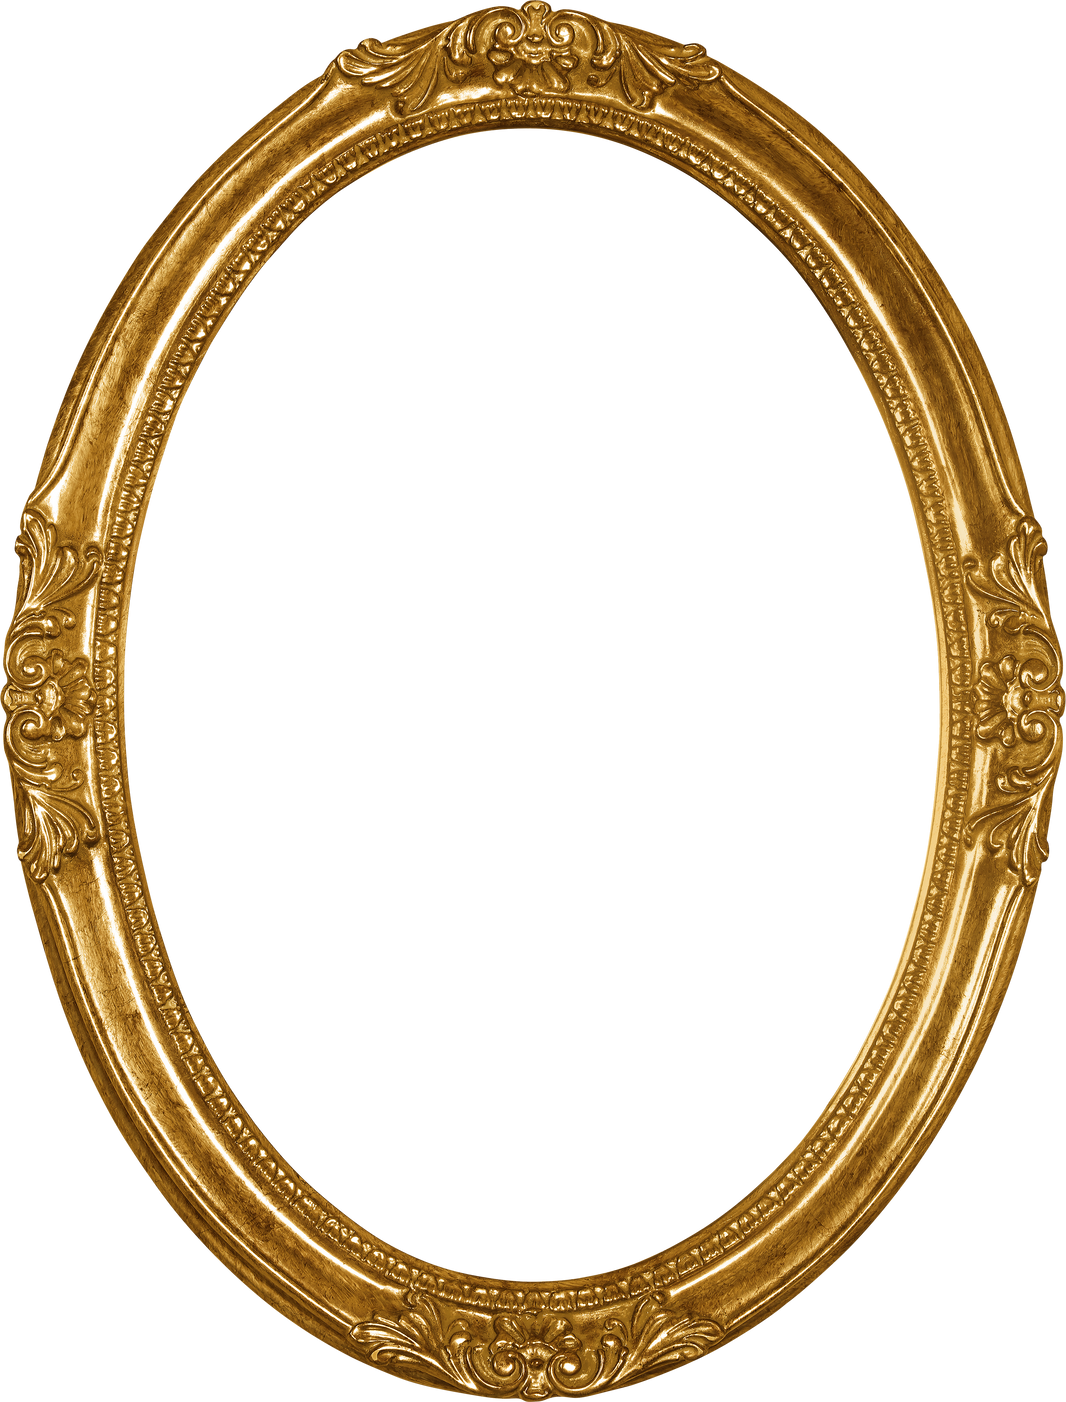 Vintage Golden Oval round Picture Frame